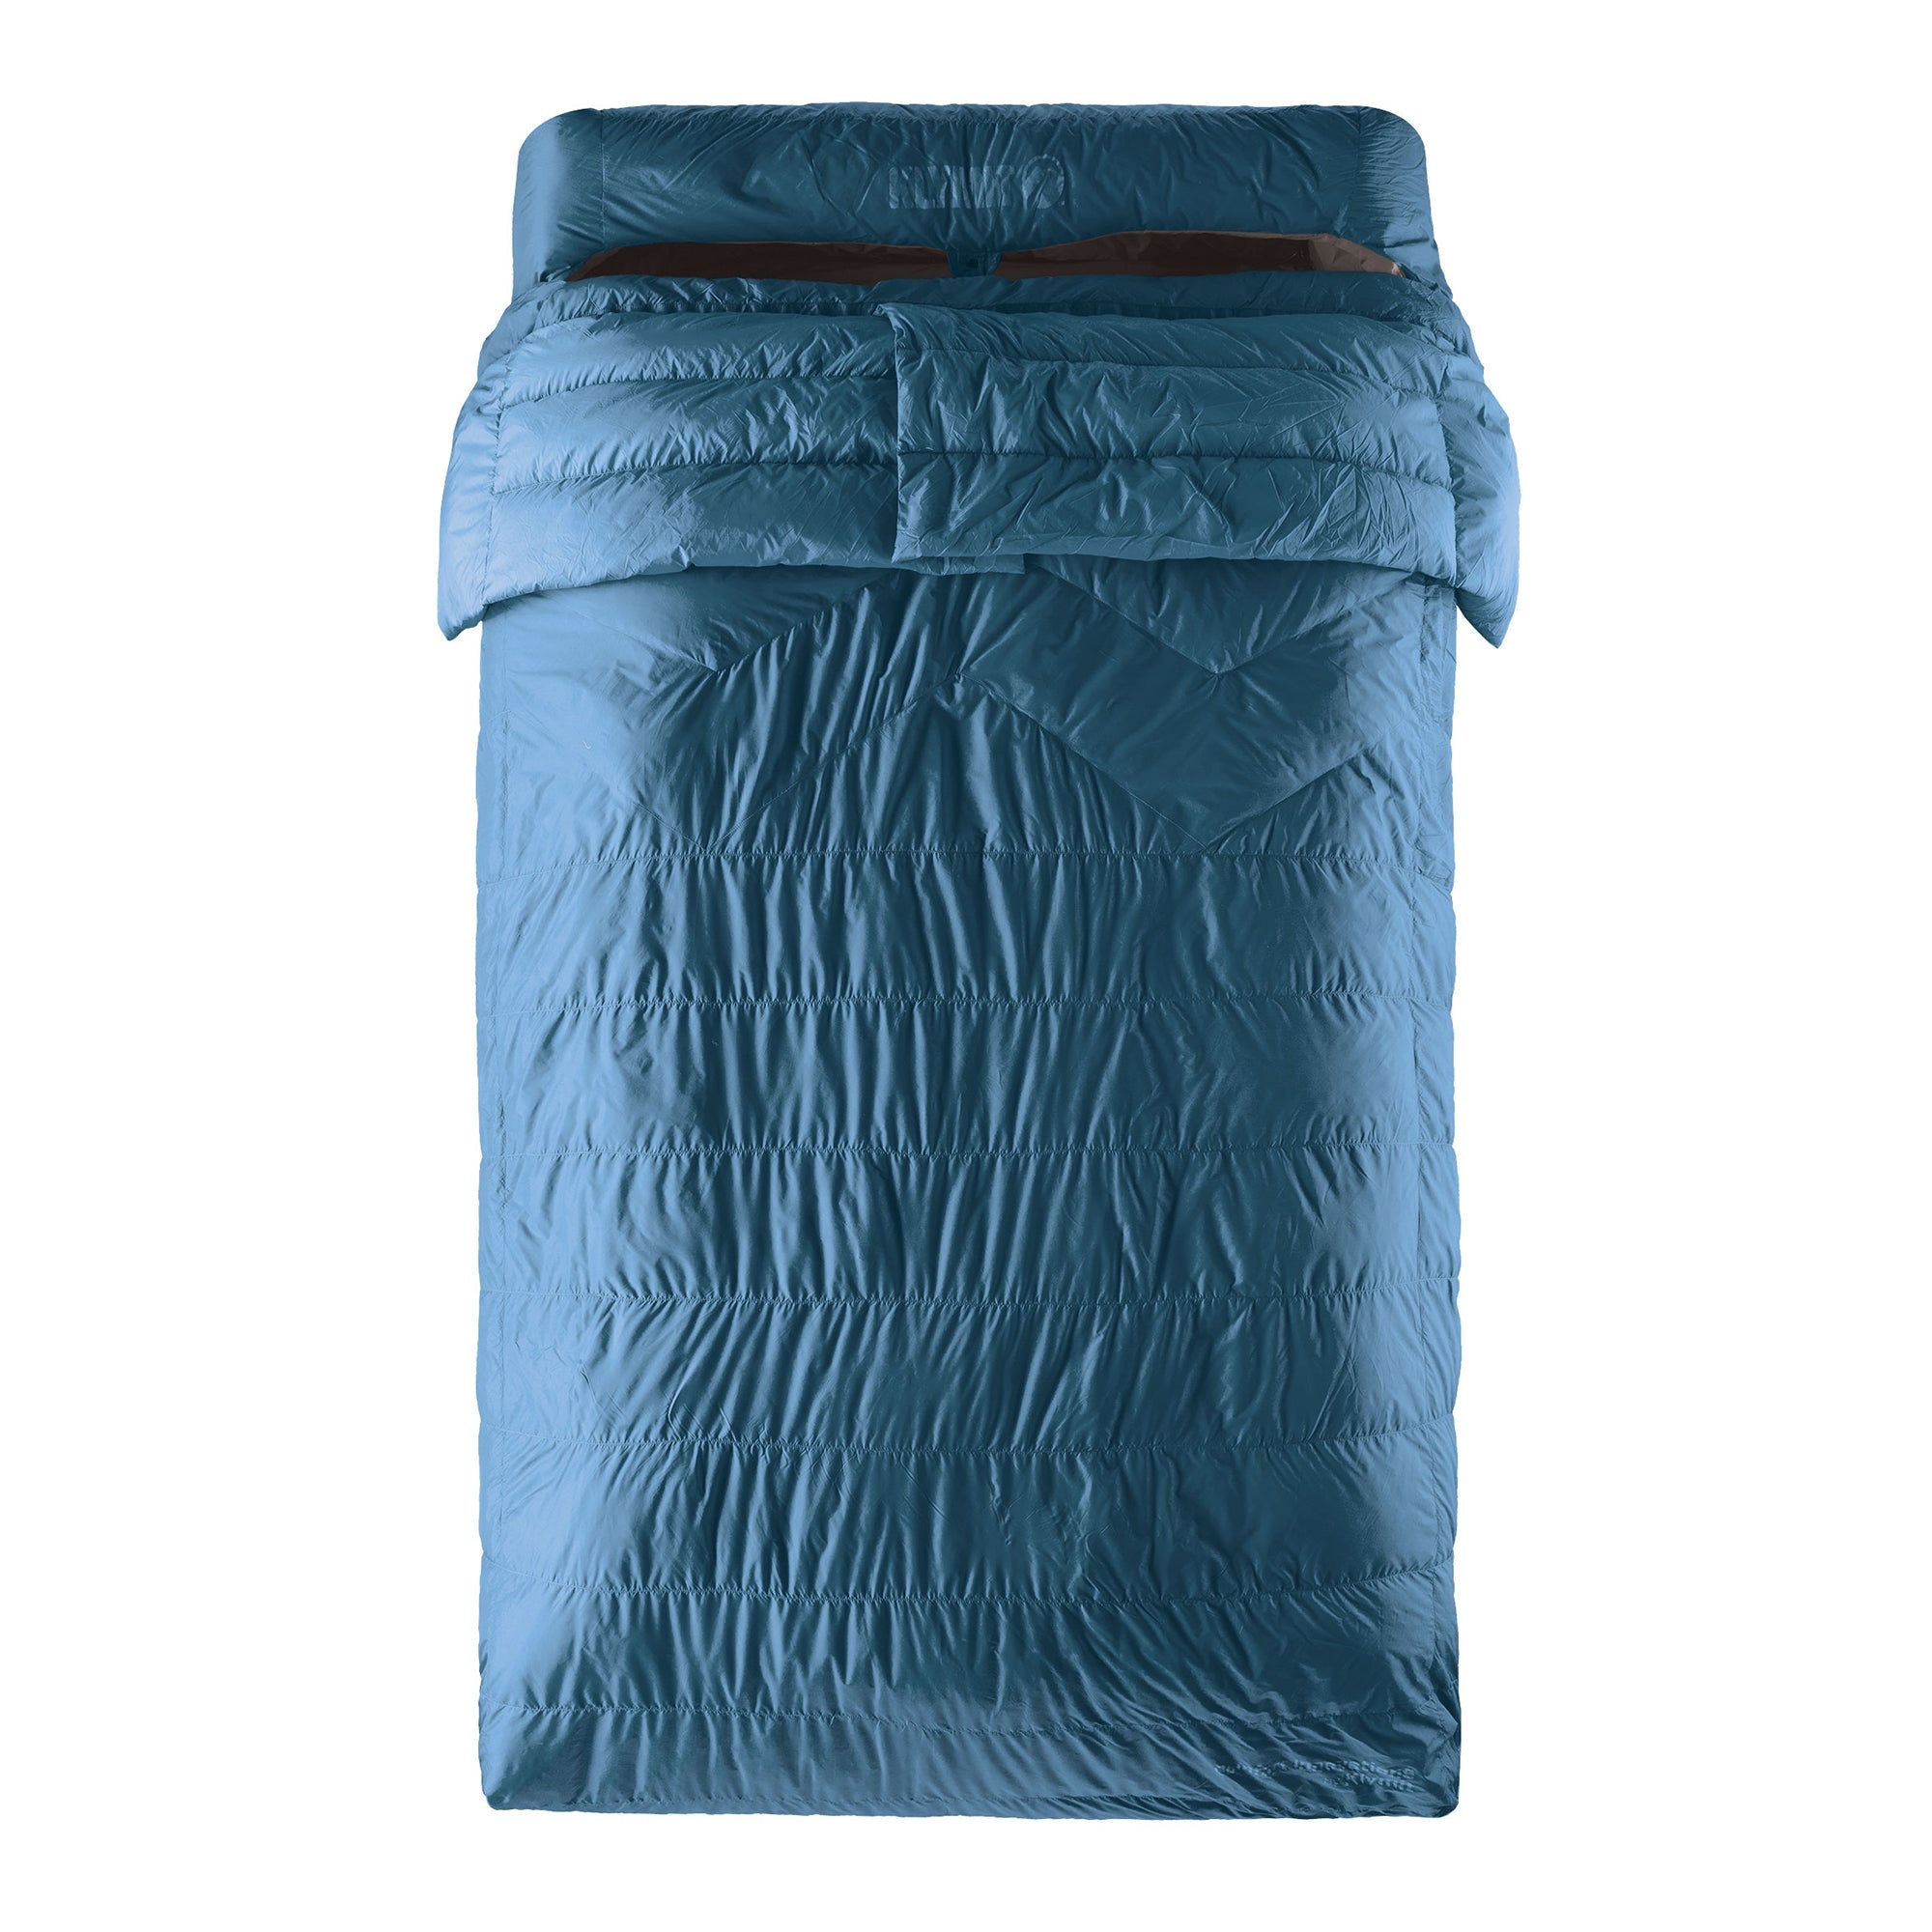 Which sleeping bag liner should I choose? – Sea to Summit Australia